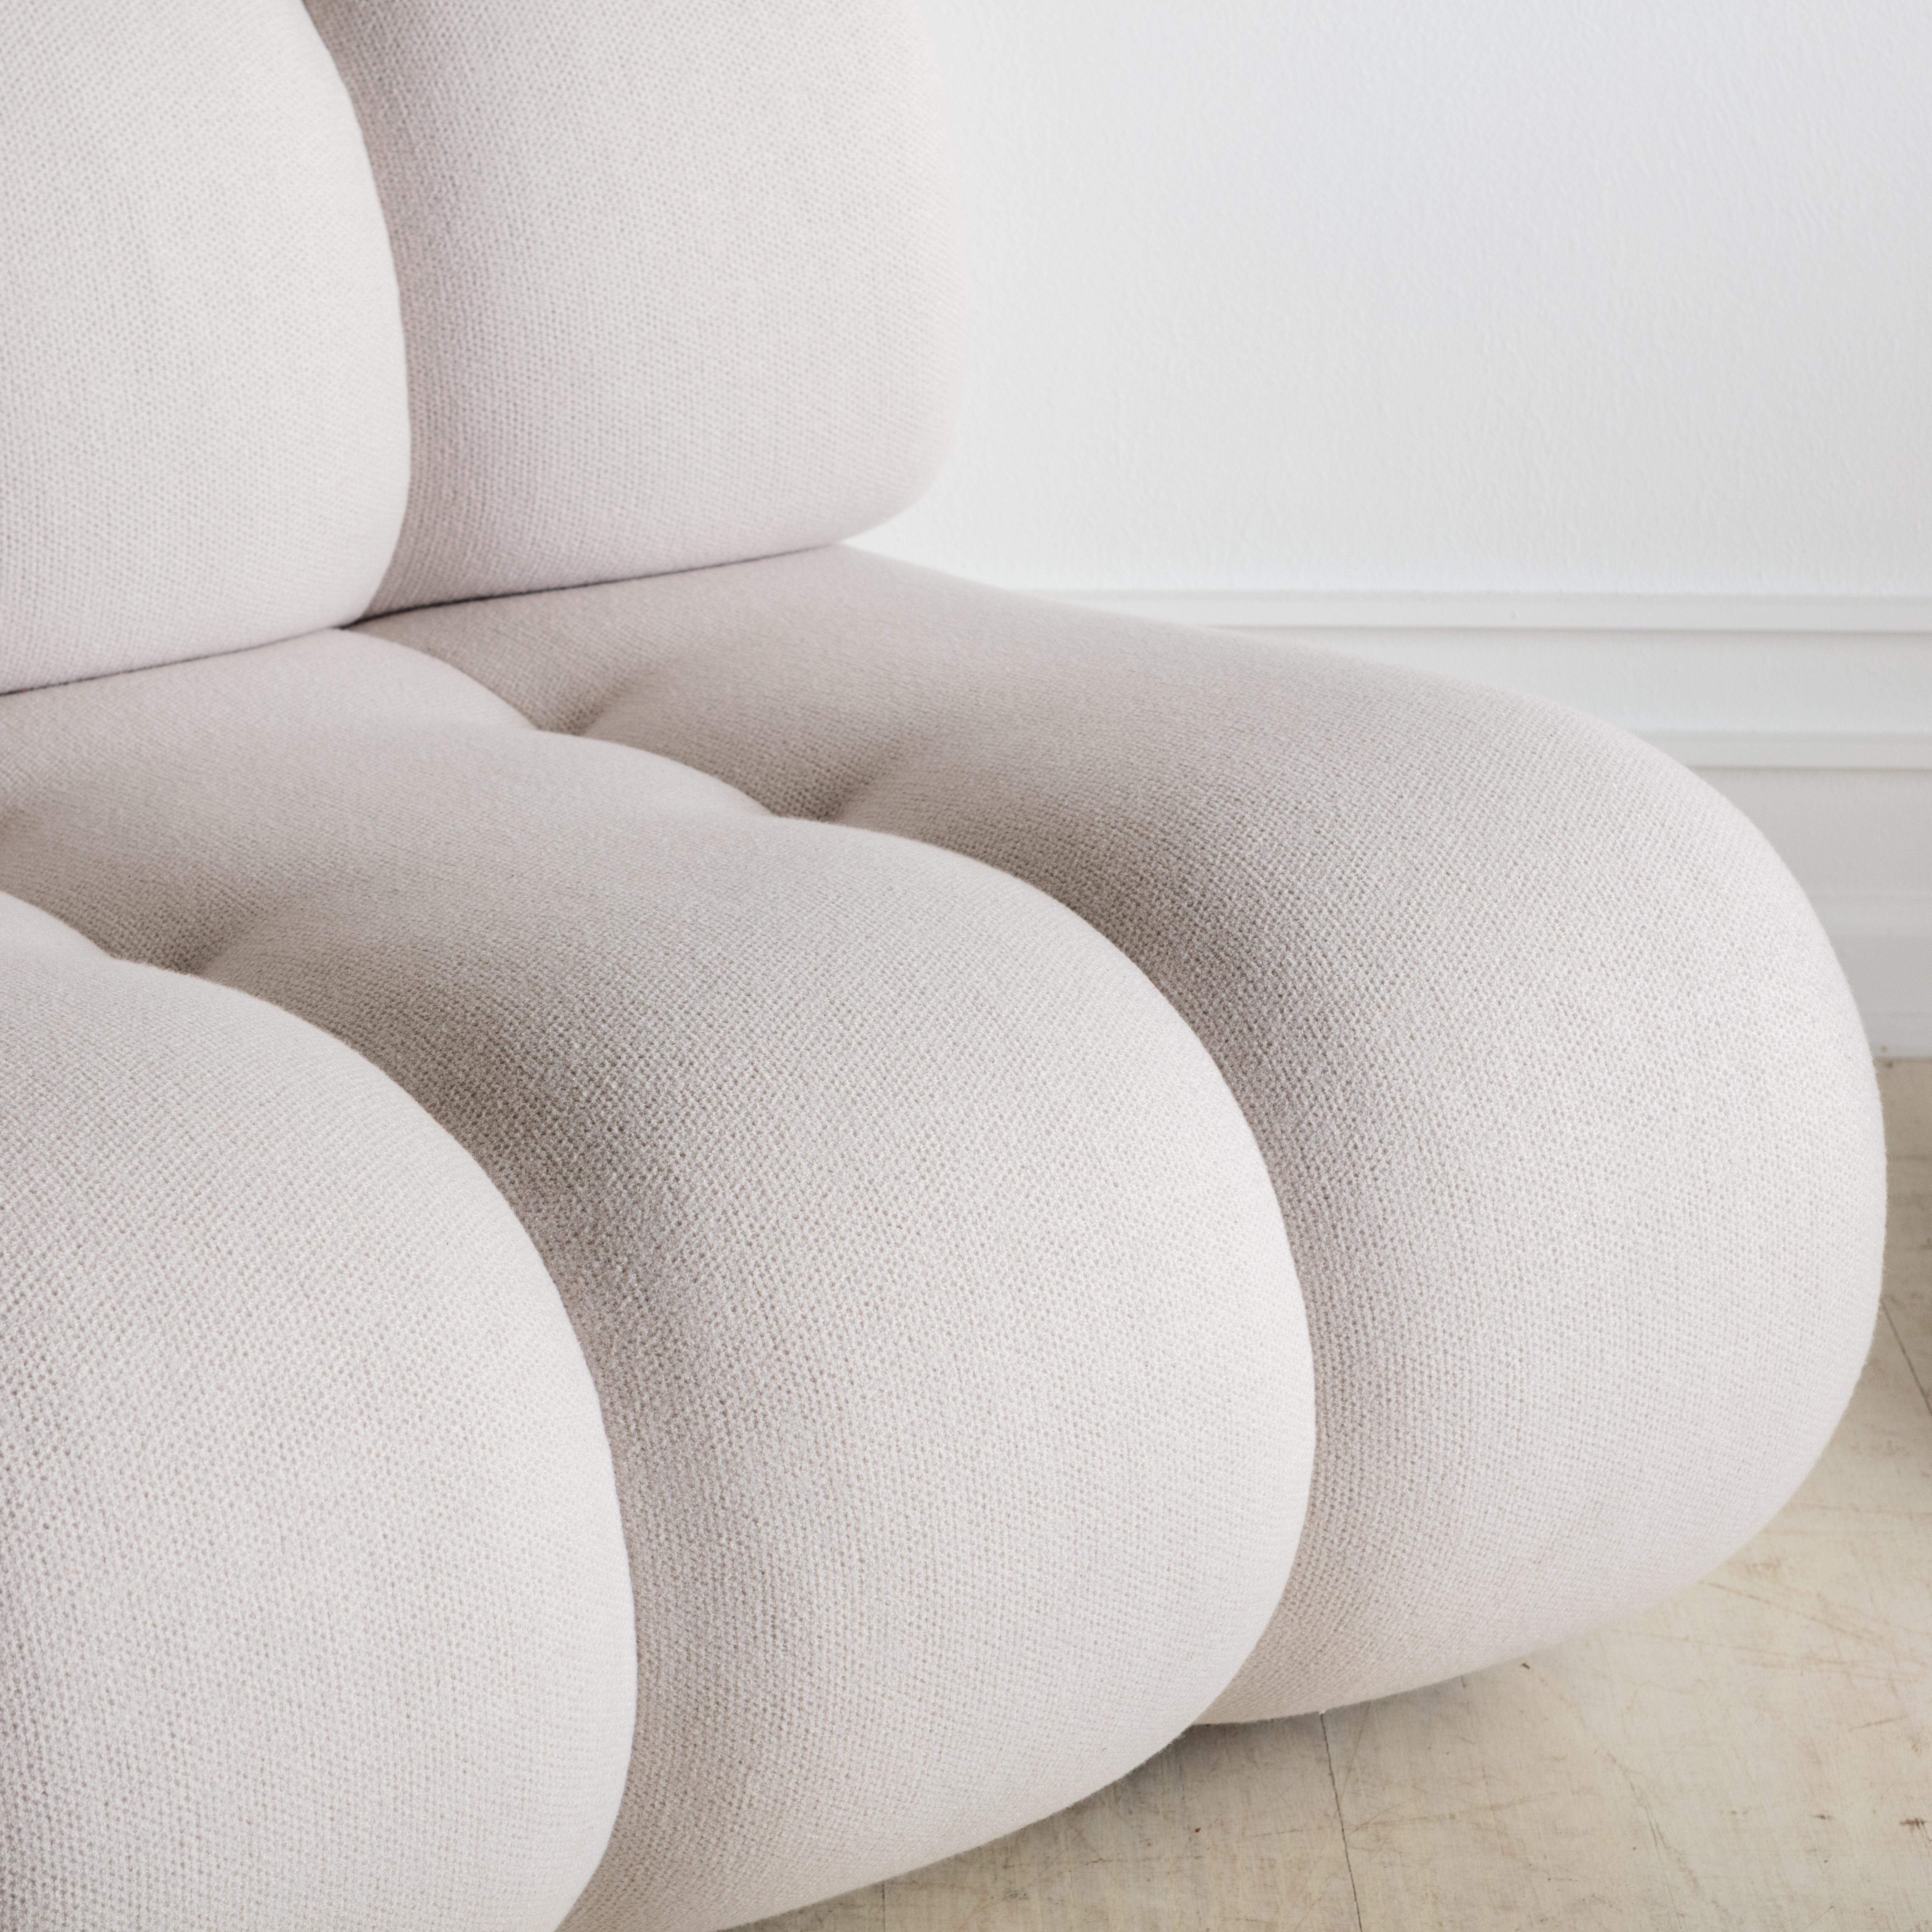 20th Century Channeled Sofa by Giuseppe Munari for Munari in new Cashmere Wool